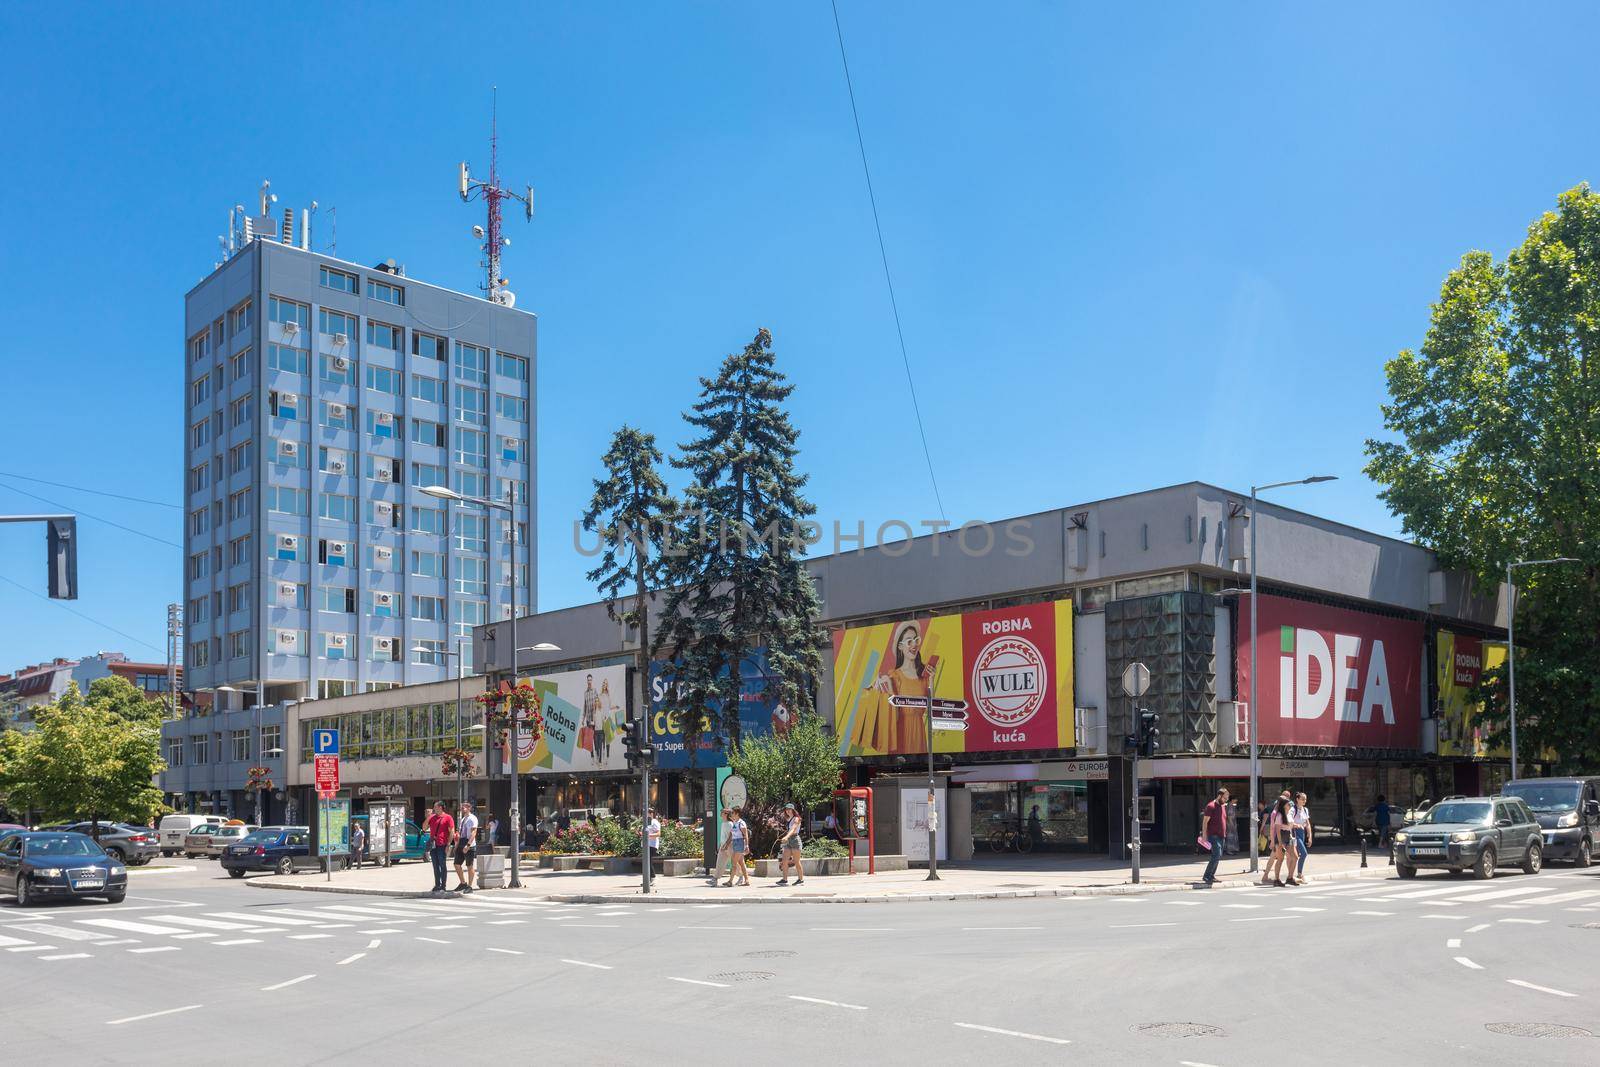 Valjevo, Serbia - June 20, 2022: City assembly and shopping center in Valjevo, town in West Serbia